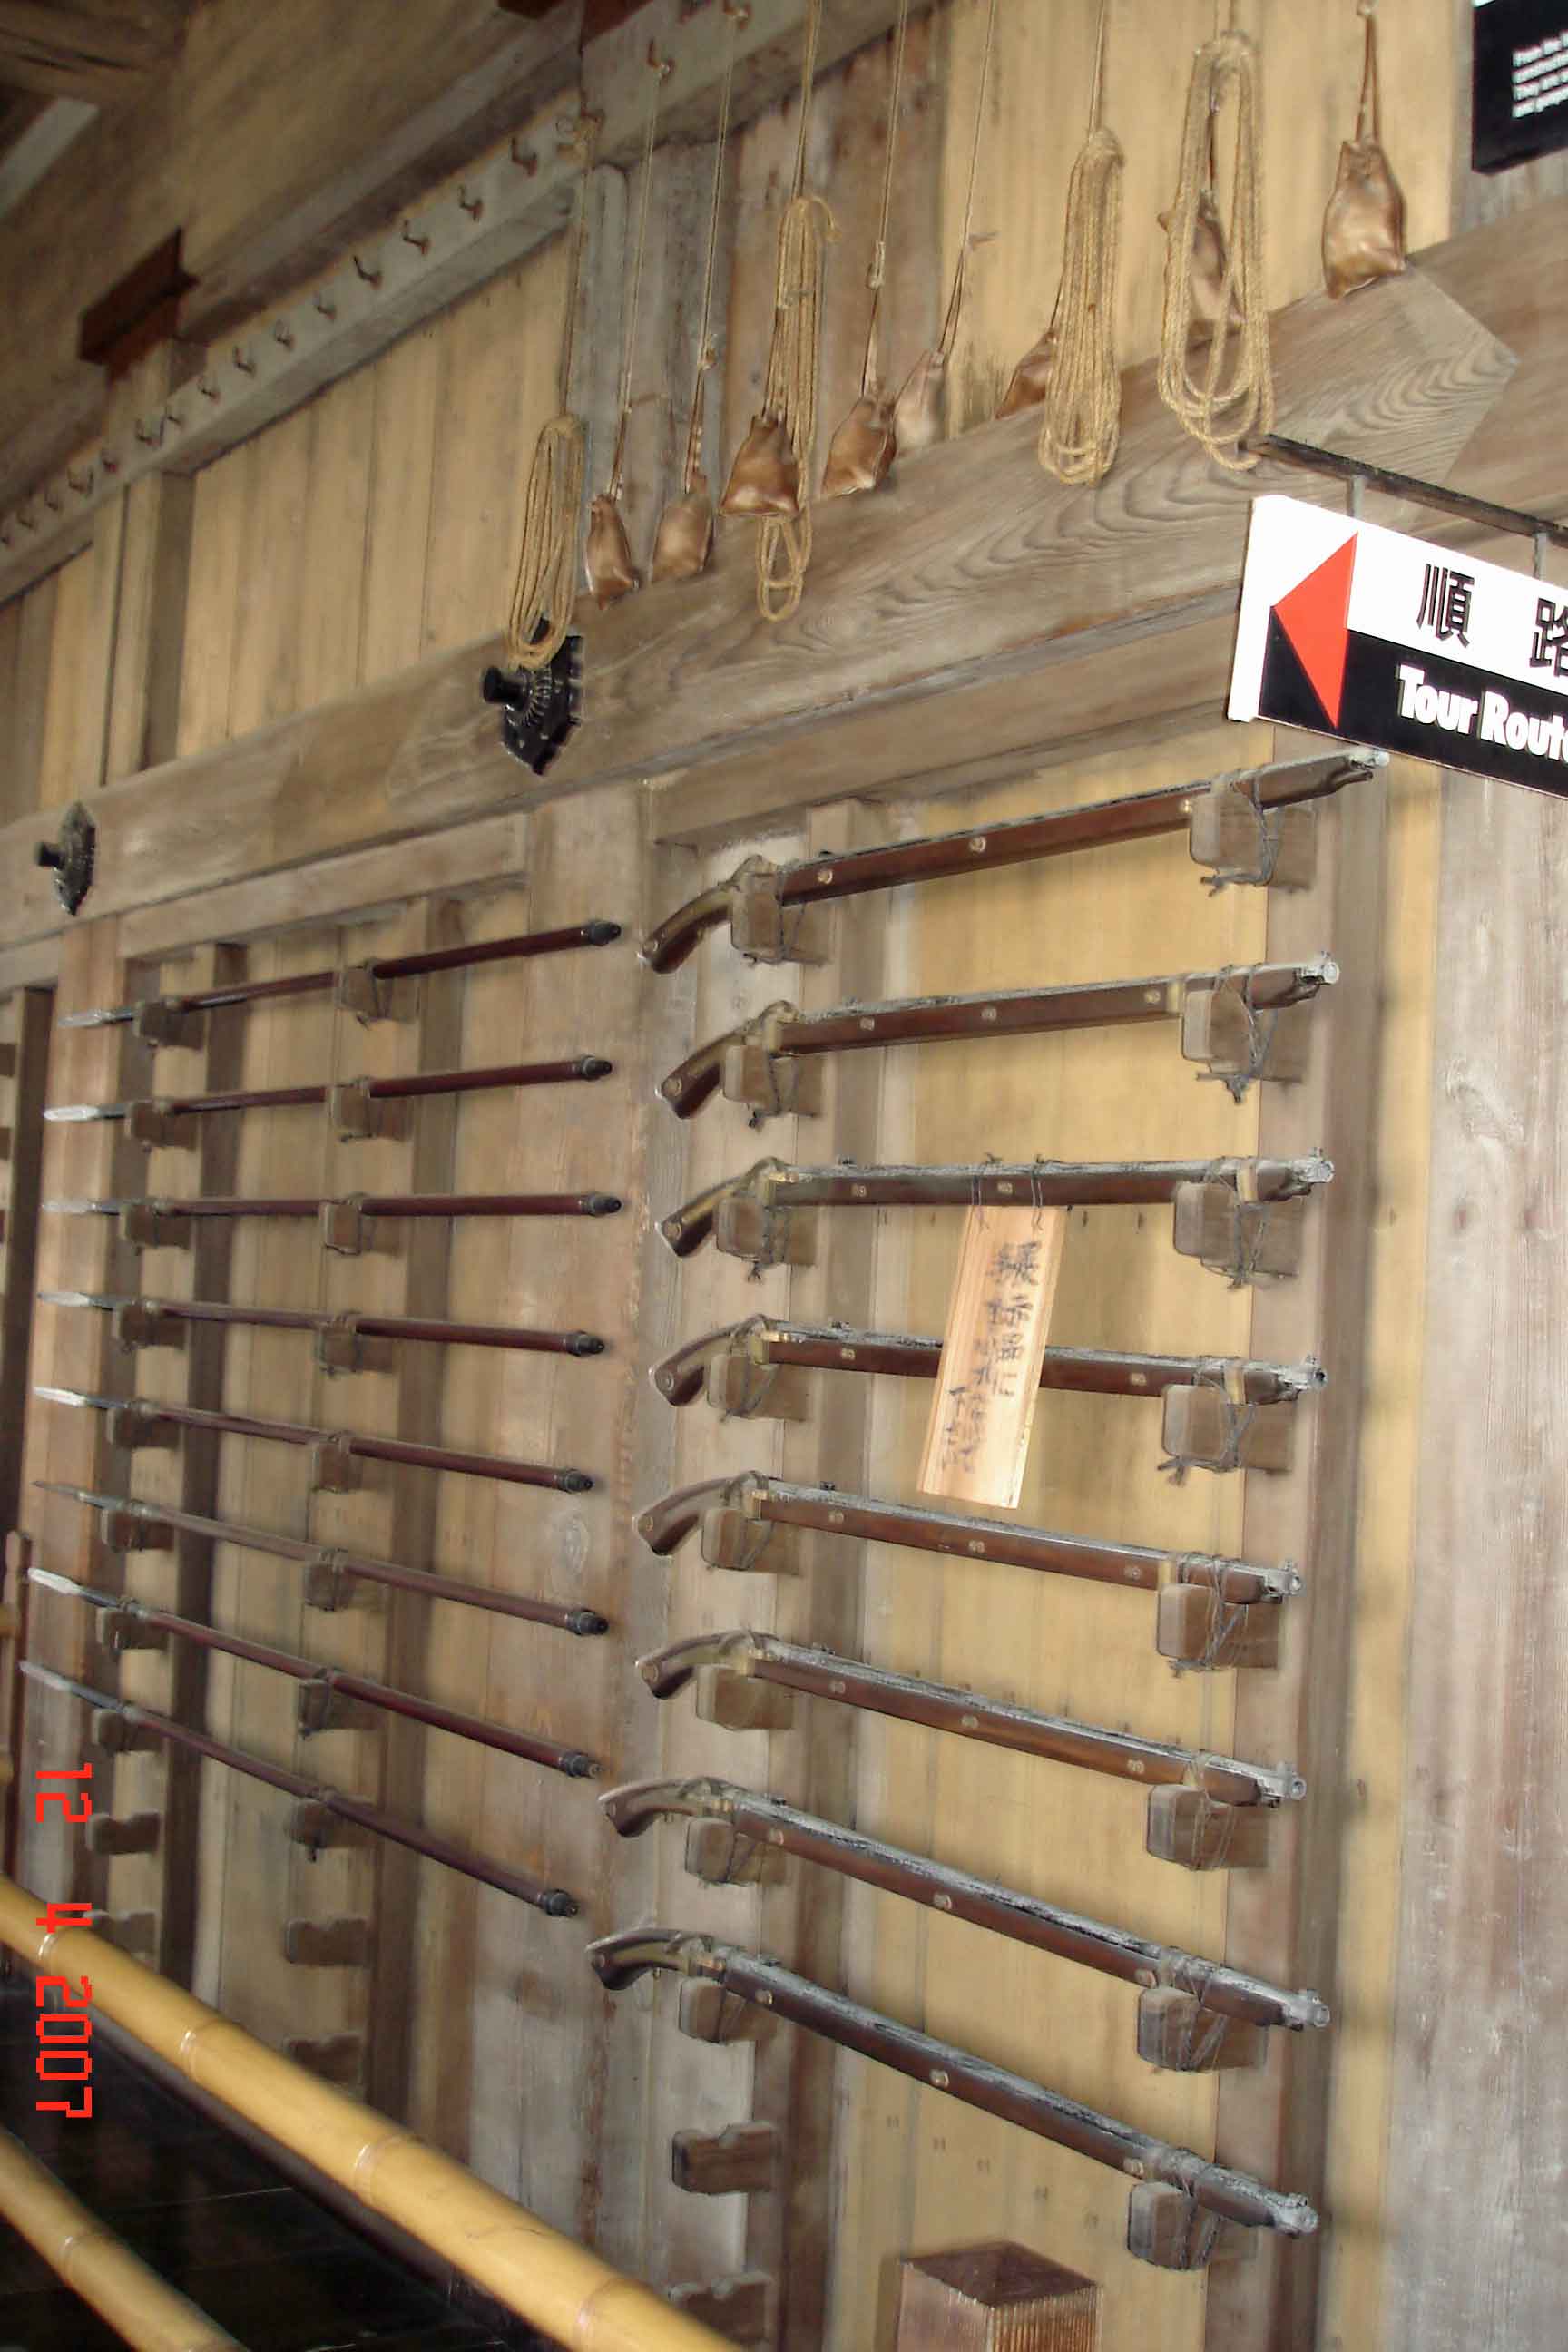 Racks of flintlocks and gun powder pouches-Himeji Castle